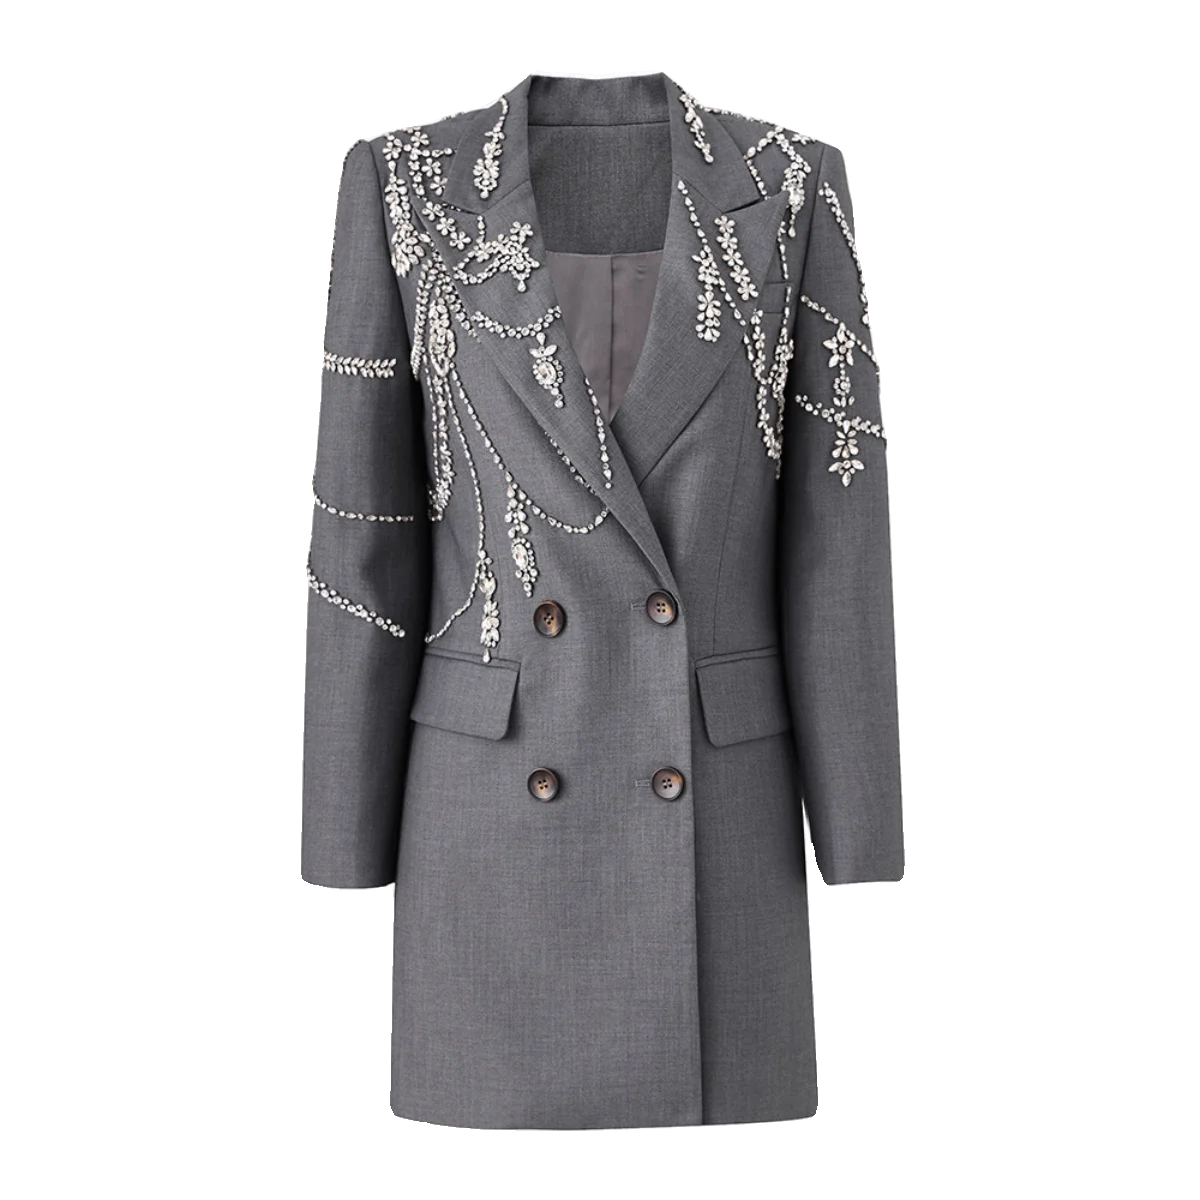 KIMLUD, Gray Blazer Handmade Crystal Inlaid Diamond Long Blazer Dress Jacket Double Breasted Button Blazer Suit Outfit Women, gray jacket / S, KIMLUD Women's Clothes